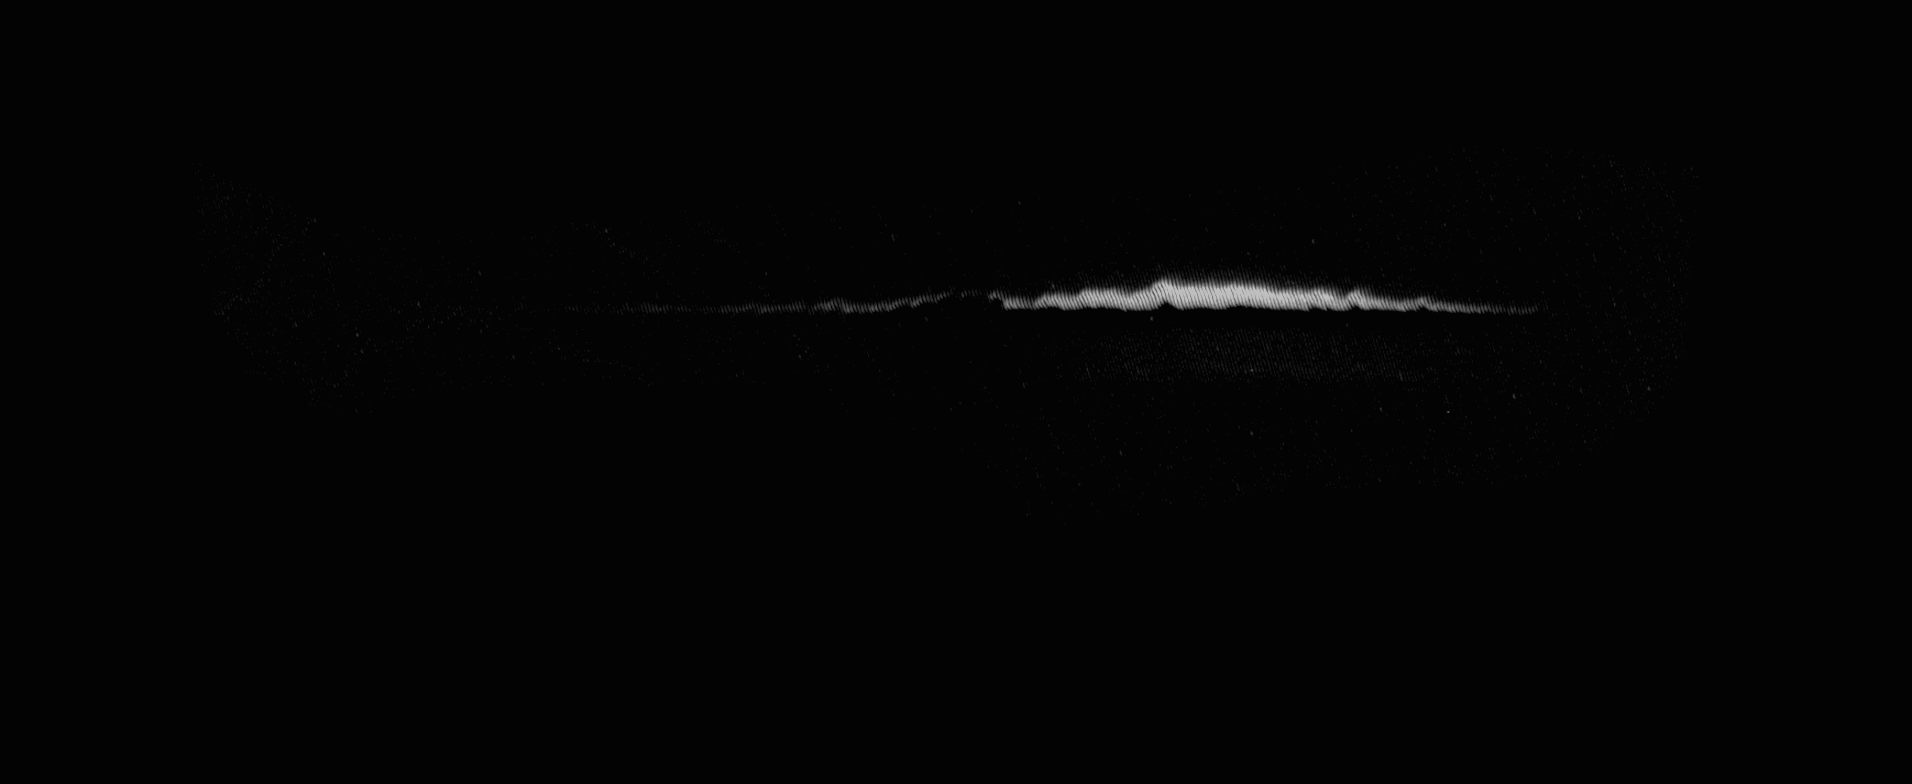 Lunar horizon glow from Surveyor 7